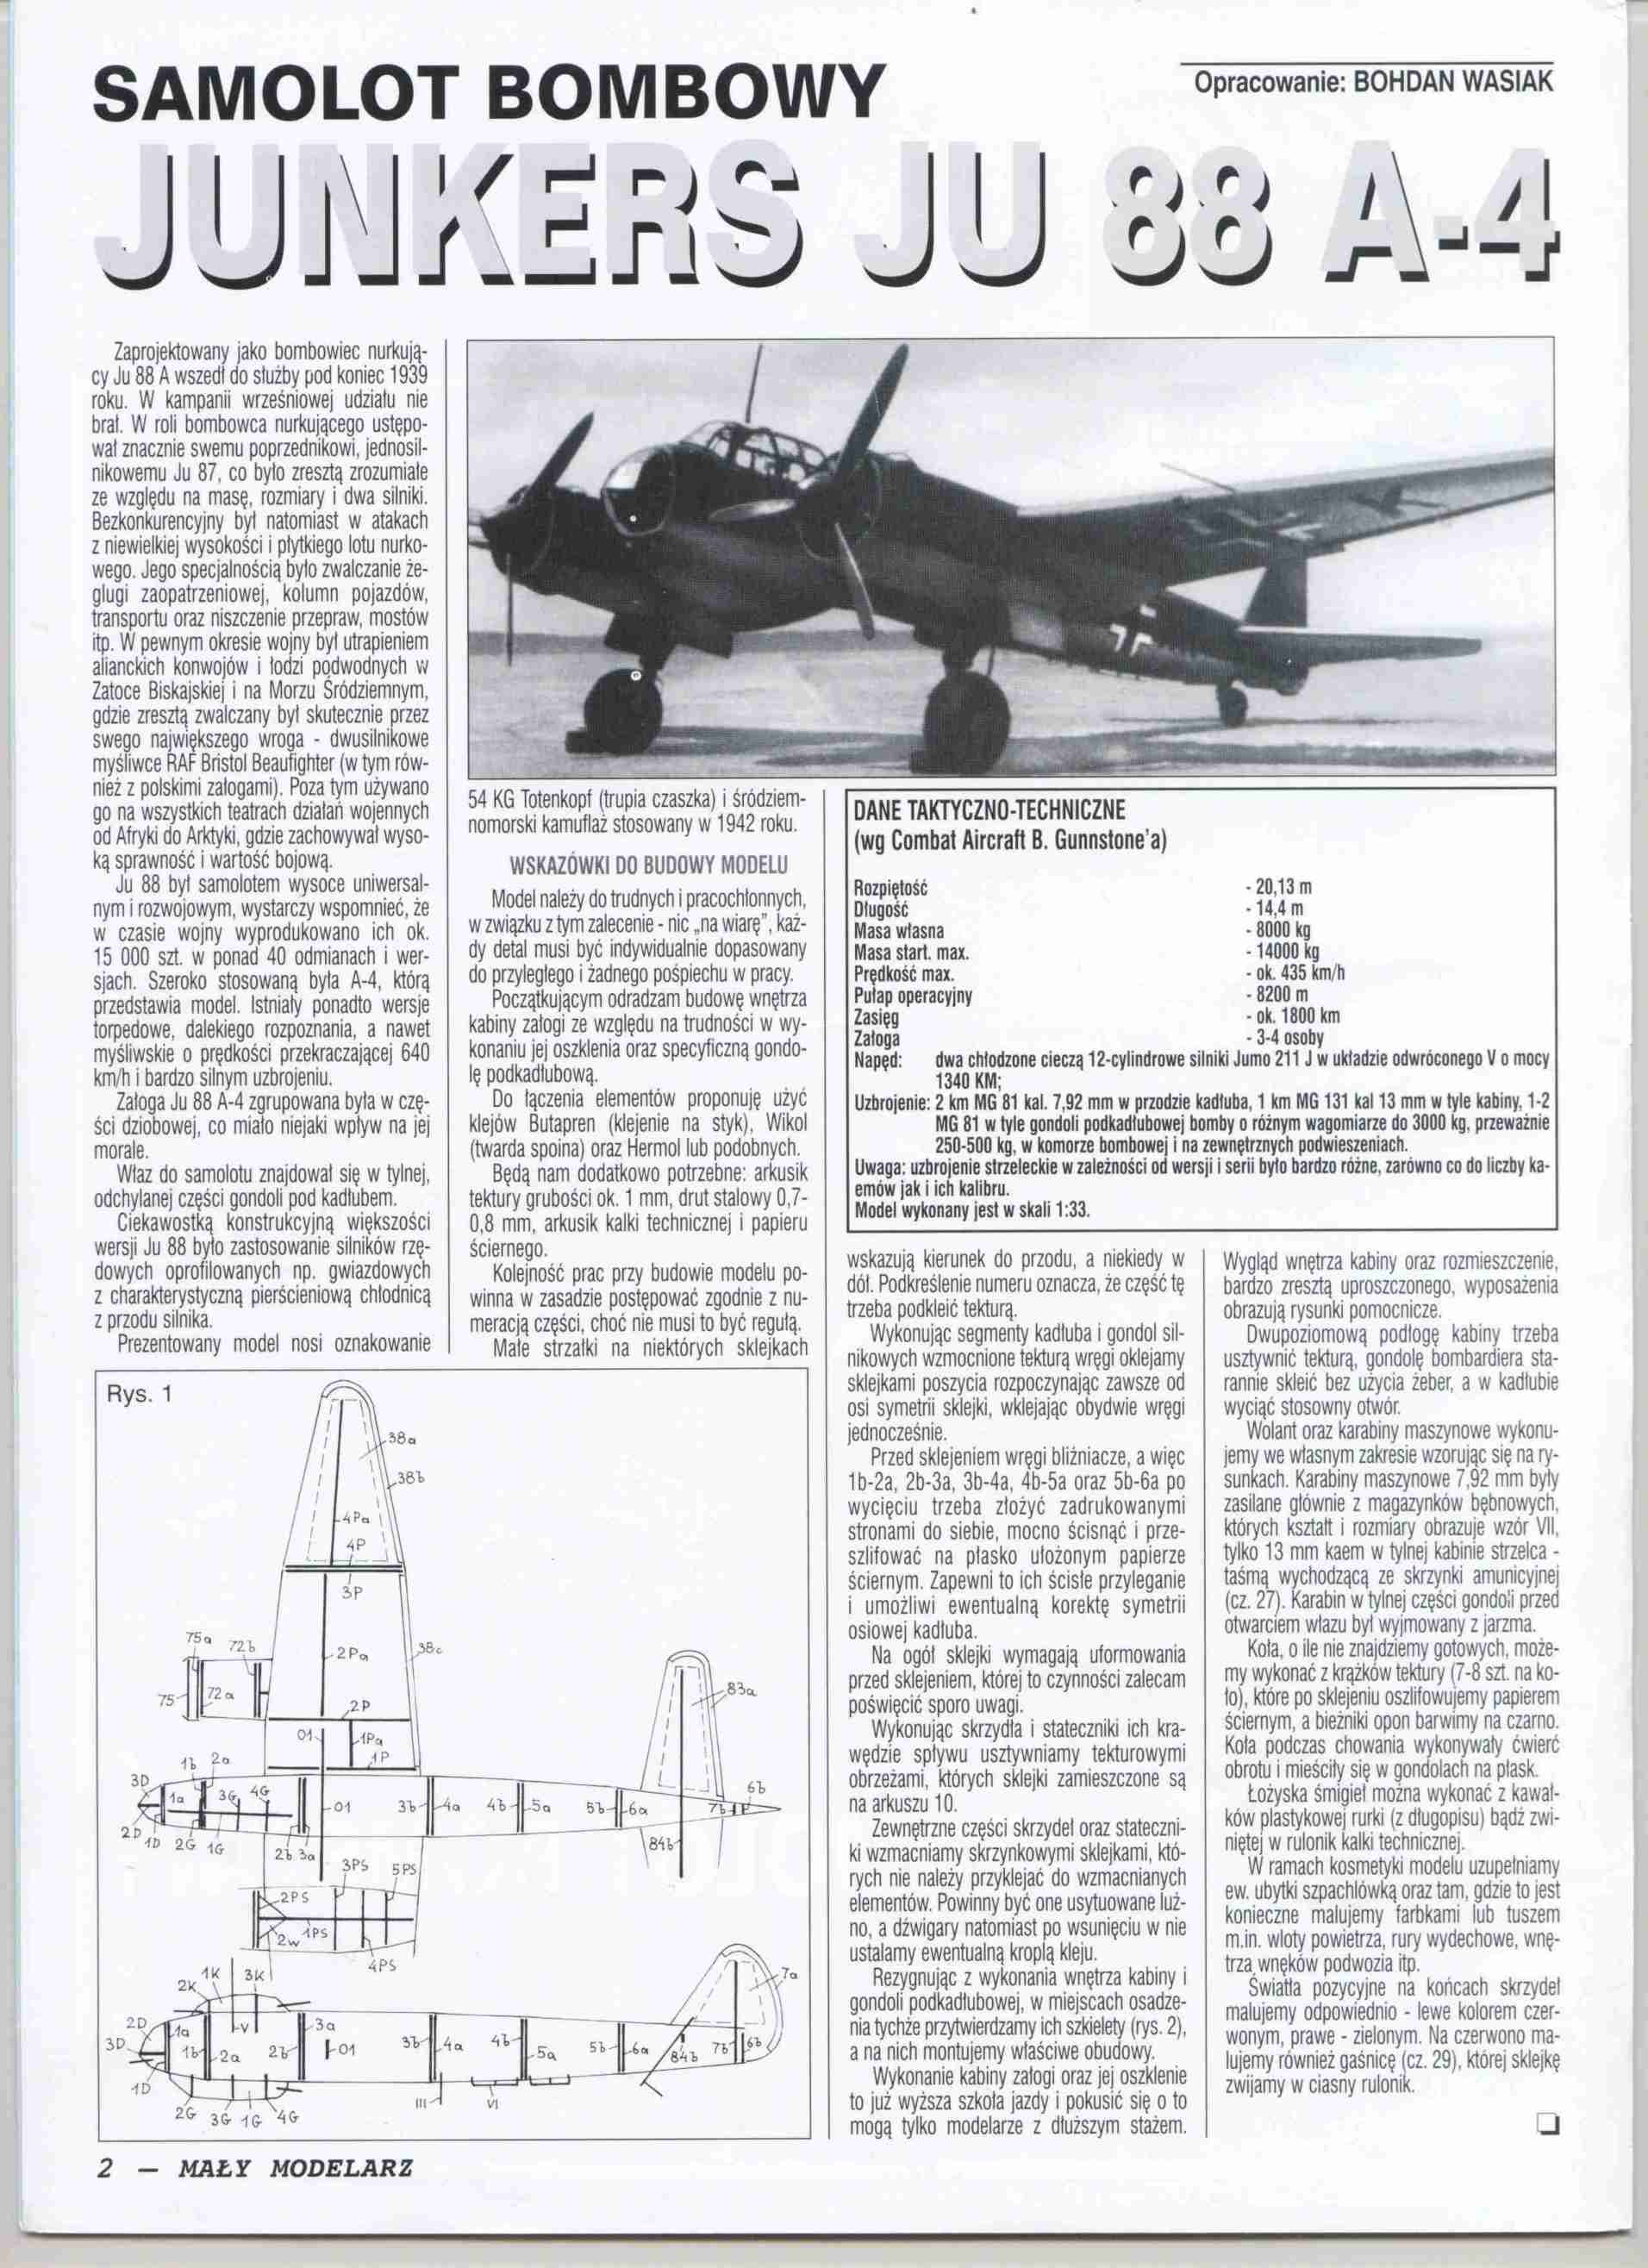 "Maly Modelarz" 7-8, 2000, 2 с.